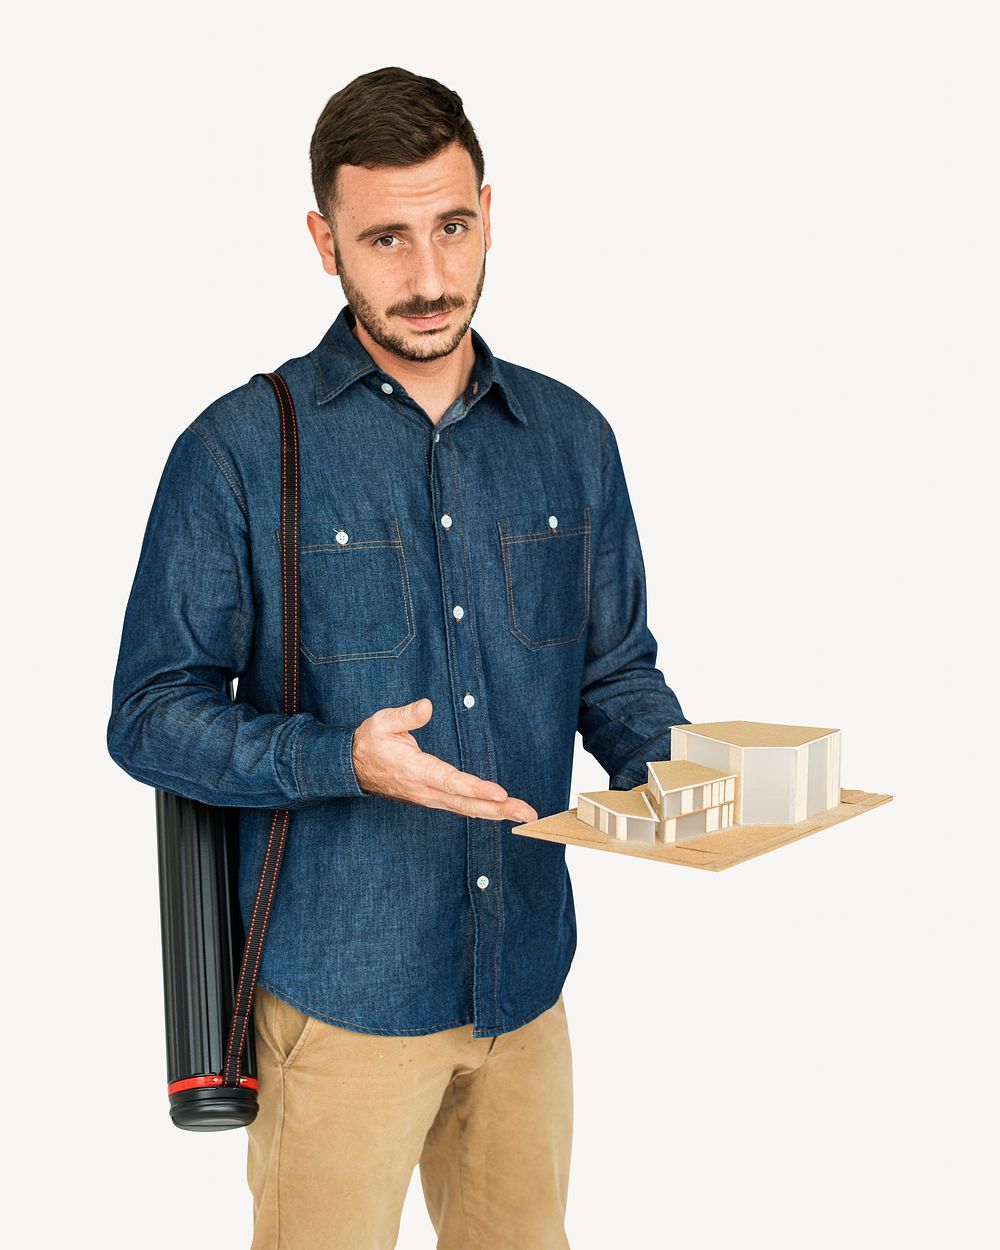 Architect man holding model building image element